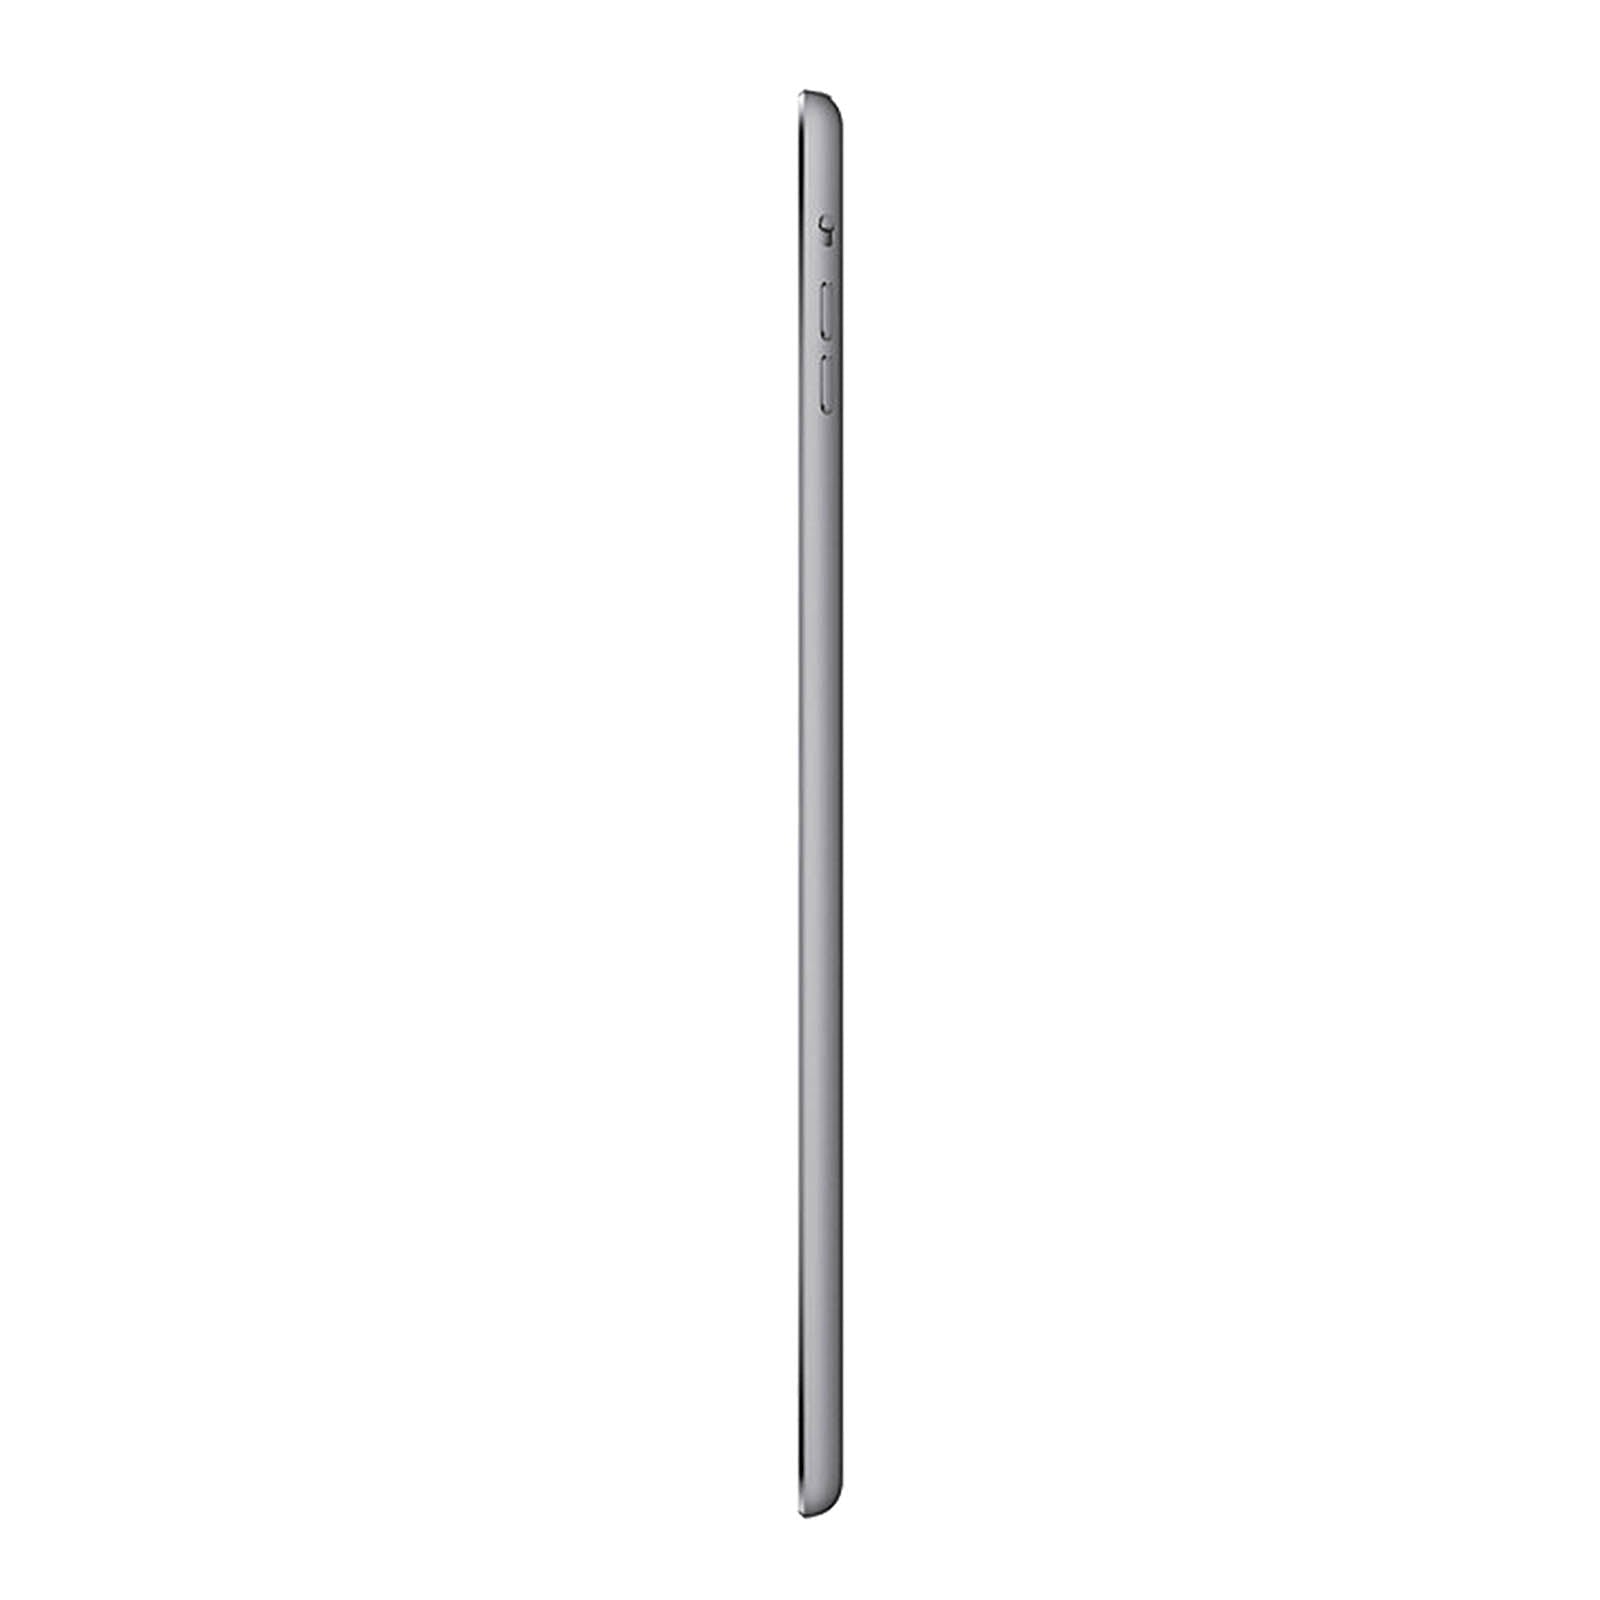 Apple iPad Air 64GB Space Grey Good - Unlocked